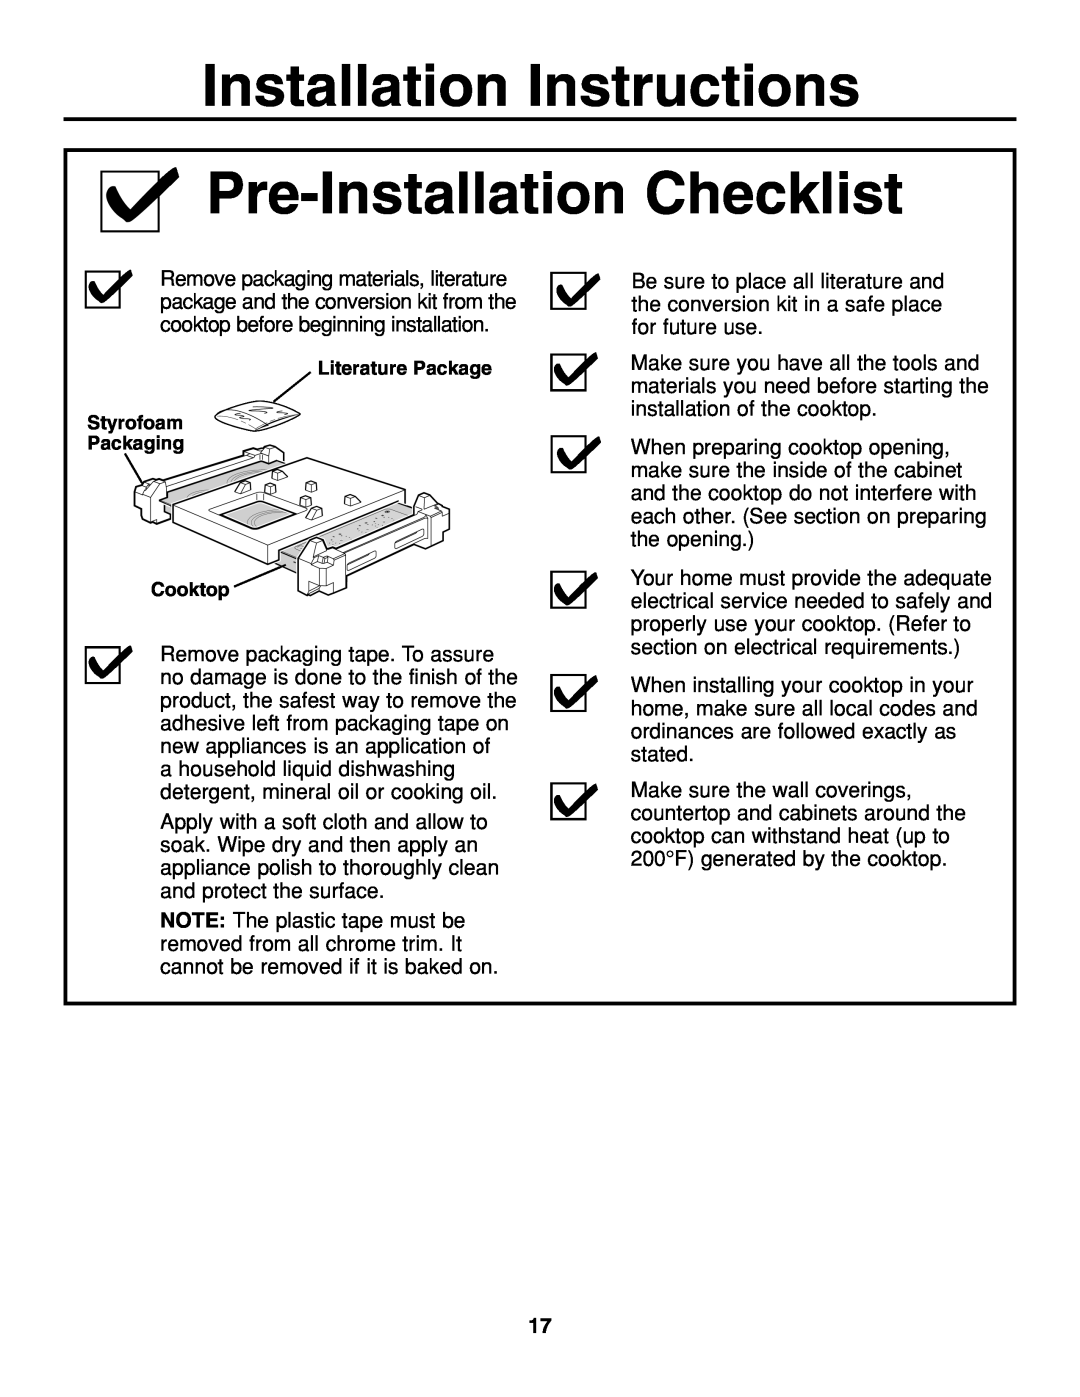 GE JGP337 operating instructions Installation Instructions Pre-Installation Checklist 